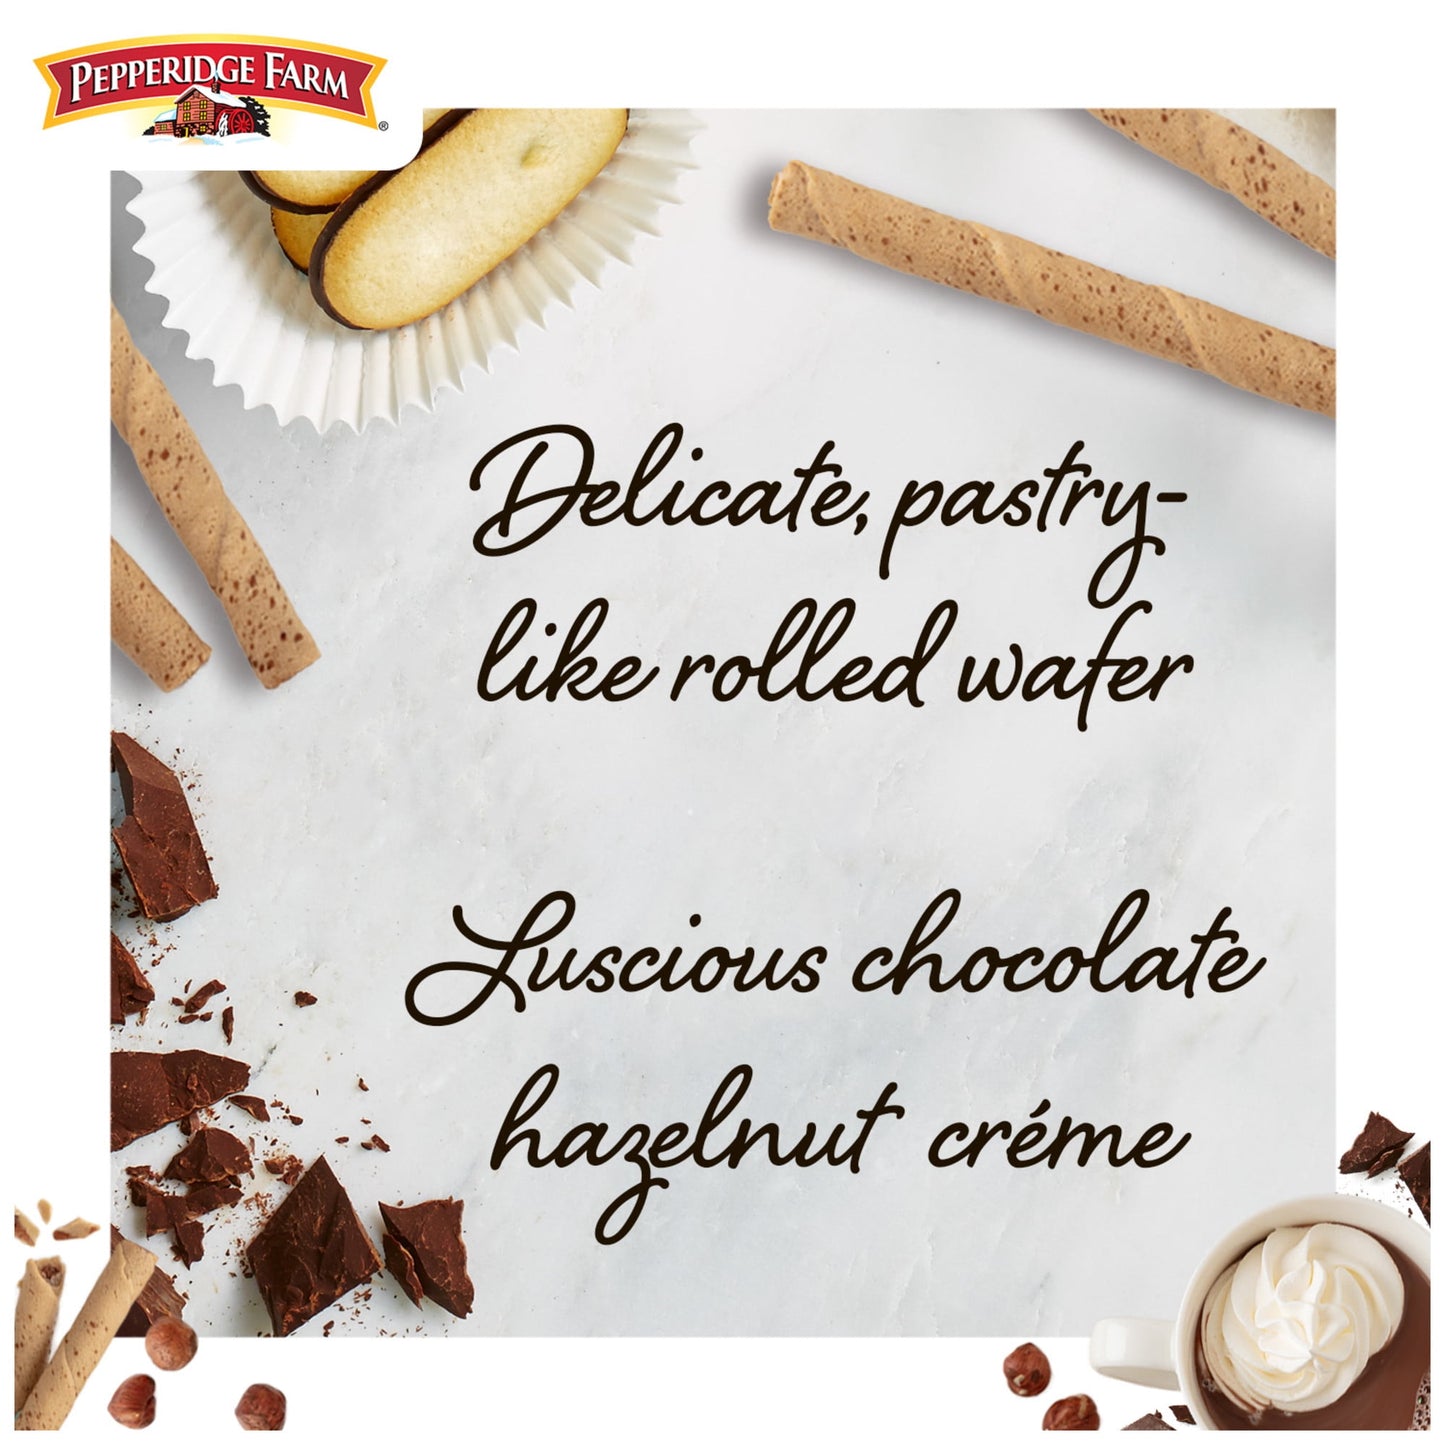 Pepperidge Farm Pirouette Cookies, Chocolate Hazelnut Créme Filled Wafers, 13.5 oz Tin